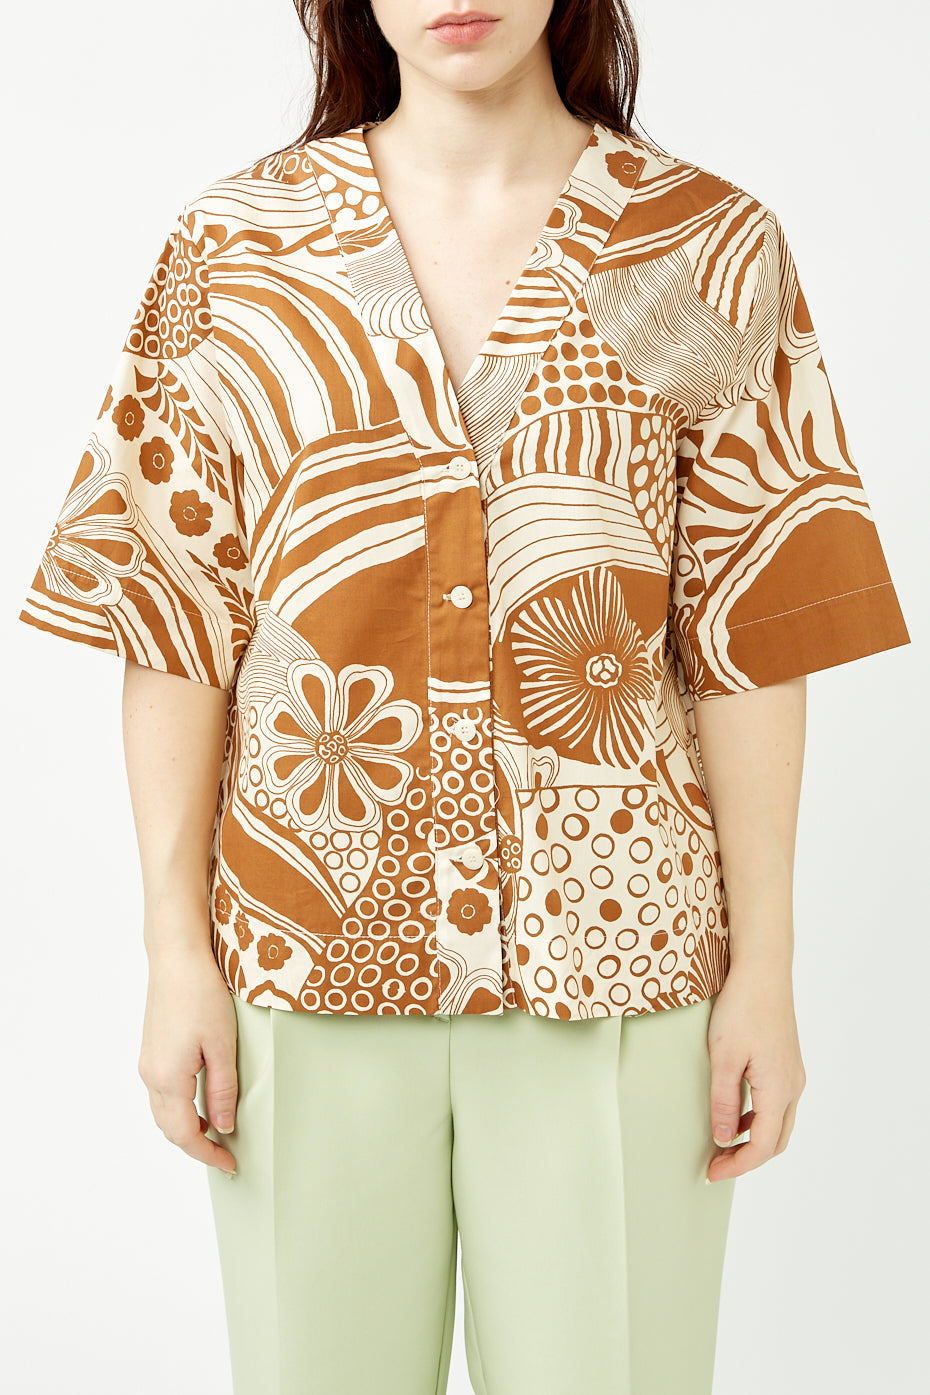 Cuoio Flower Shirt